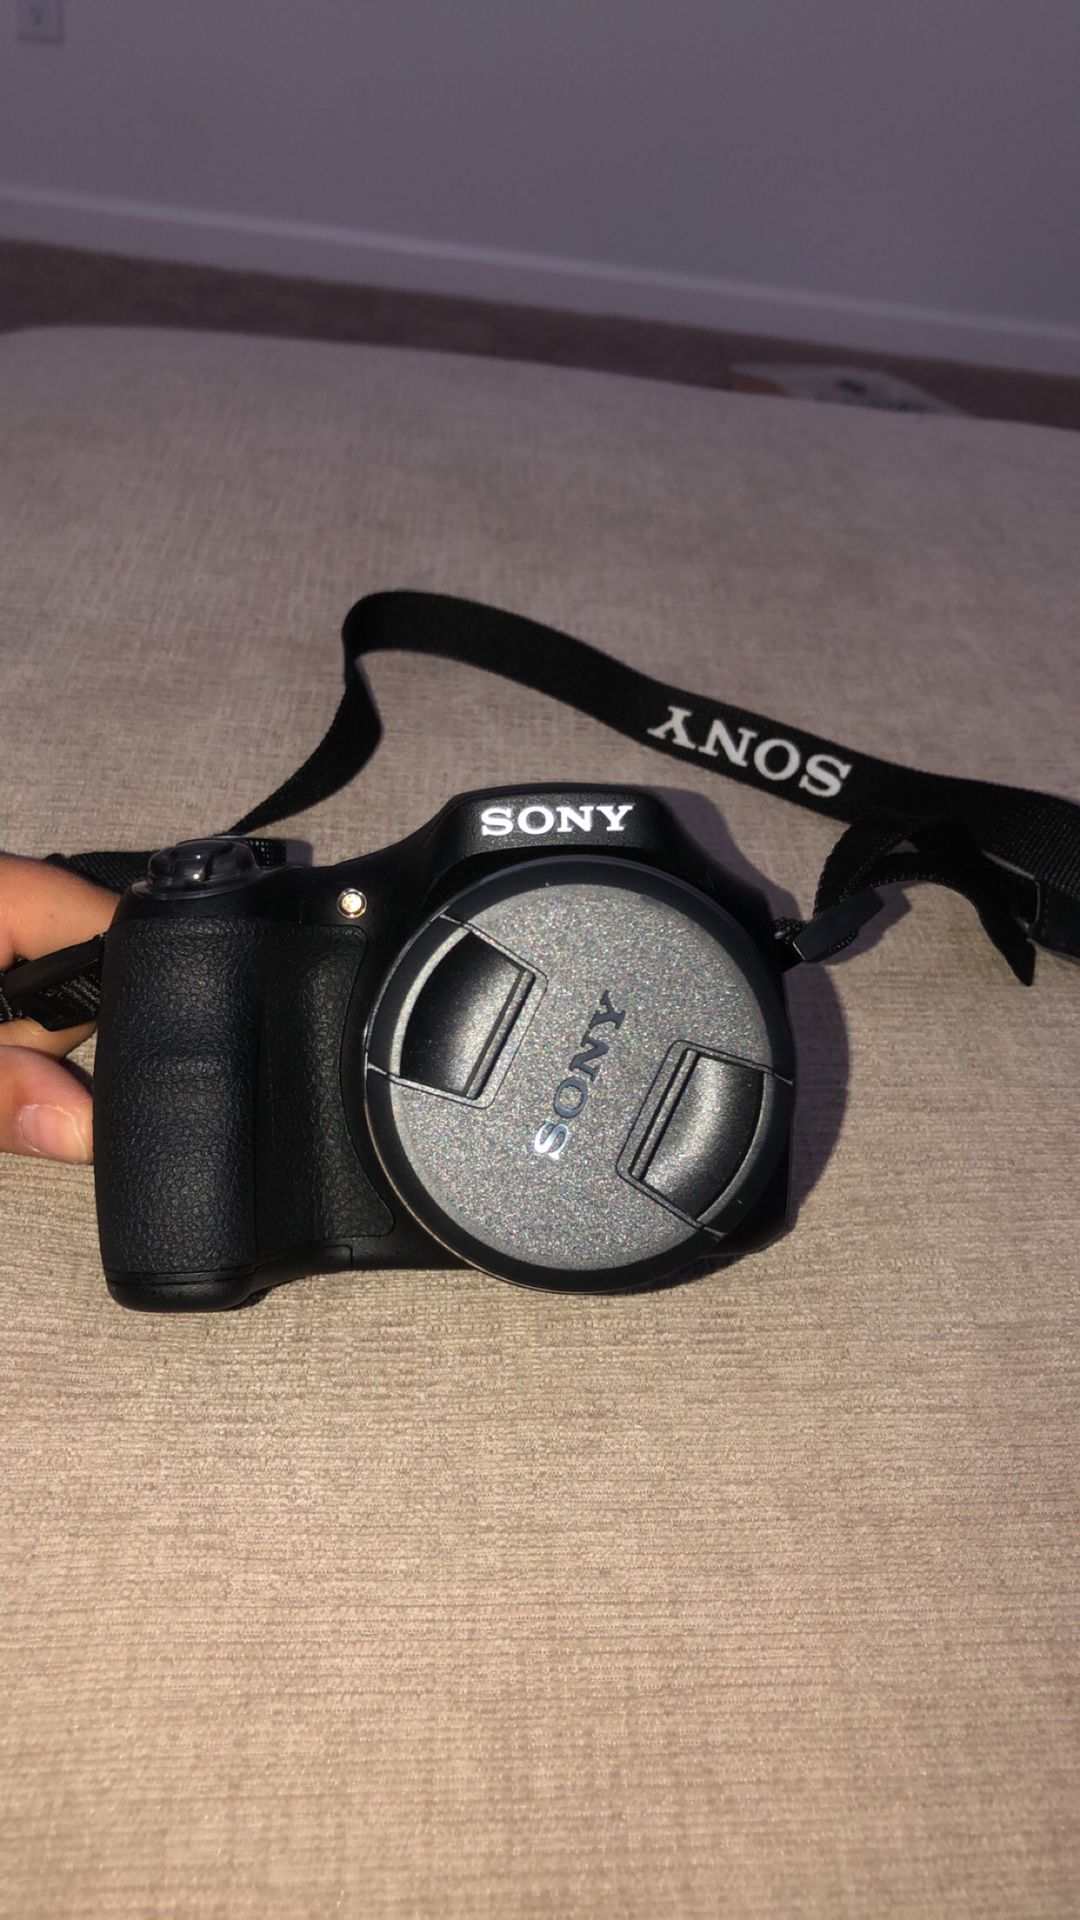 Sony DSC-H300 camera